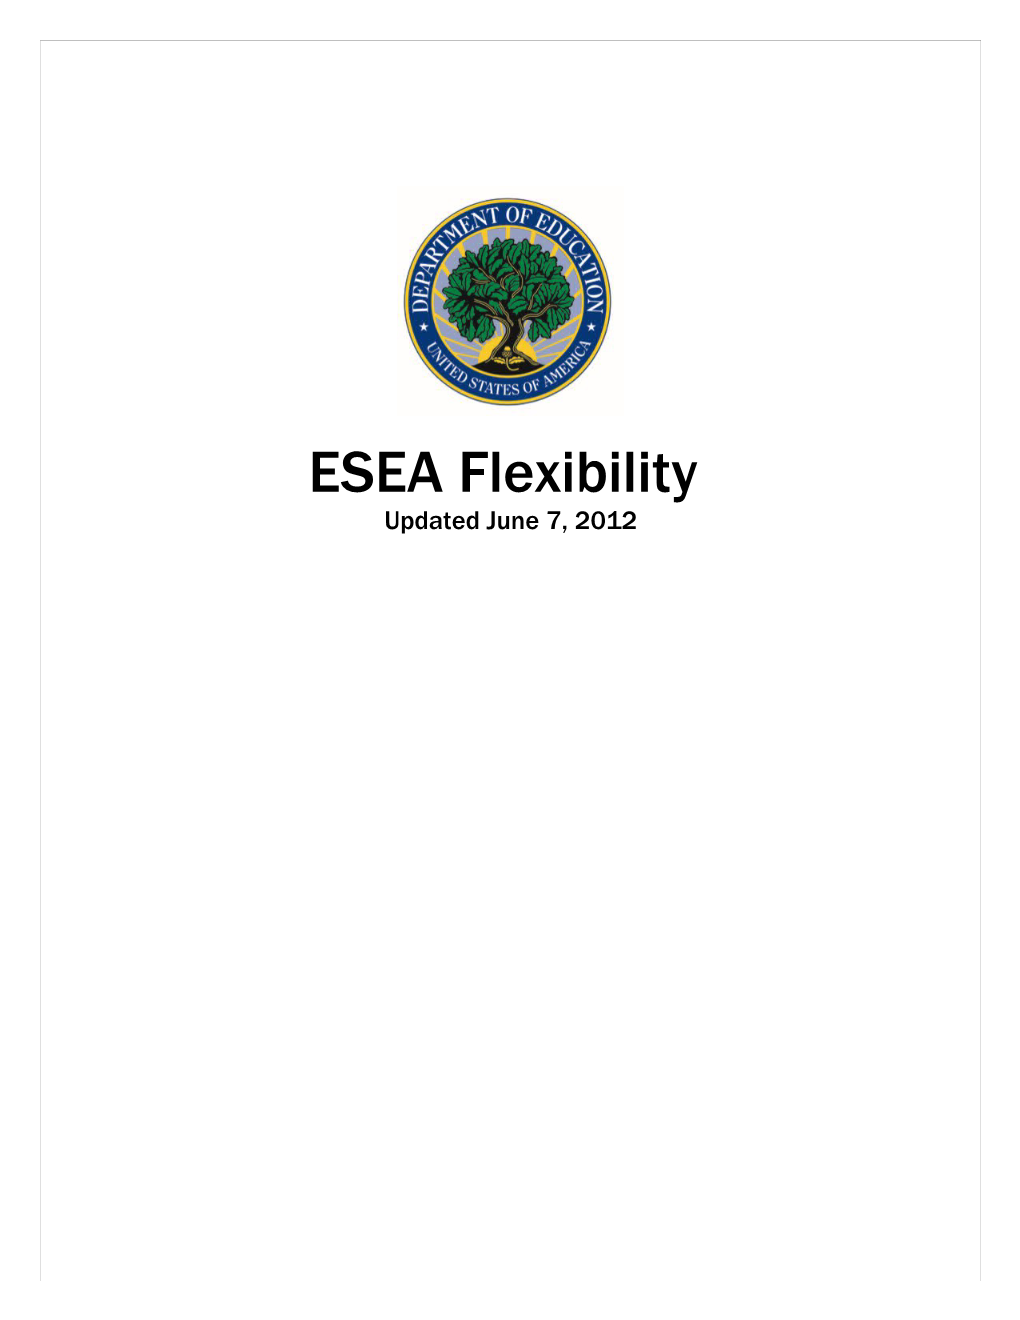 ESEA Flexibility June 8, 2012 (Msword)